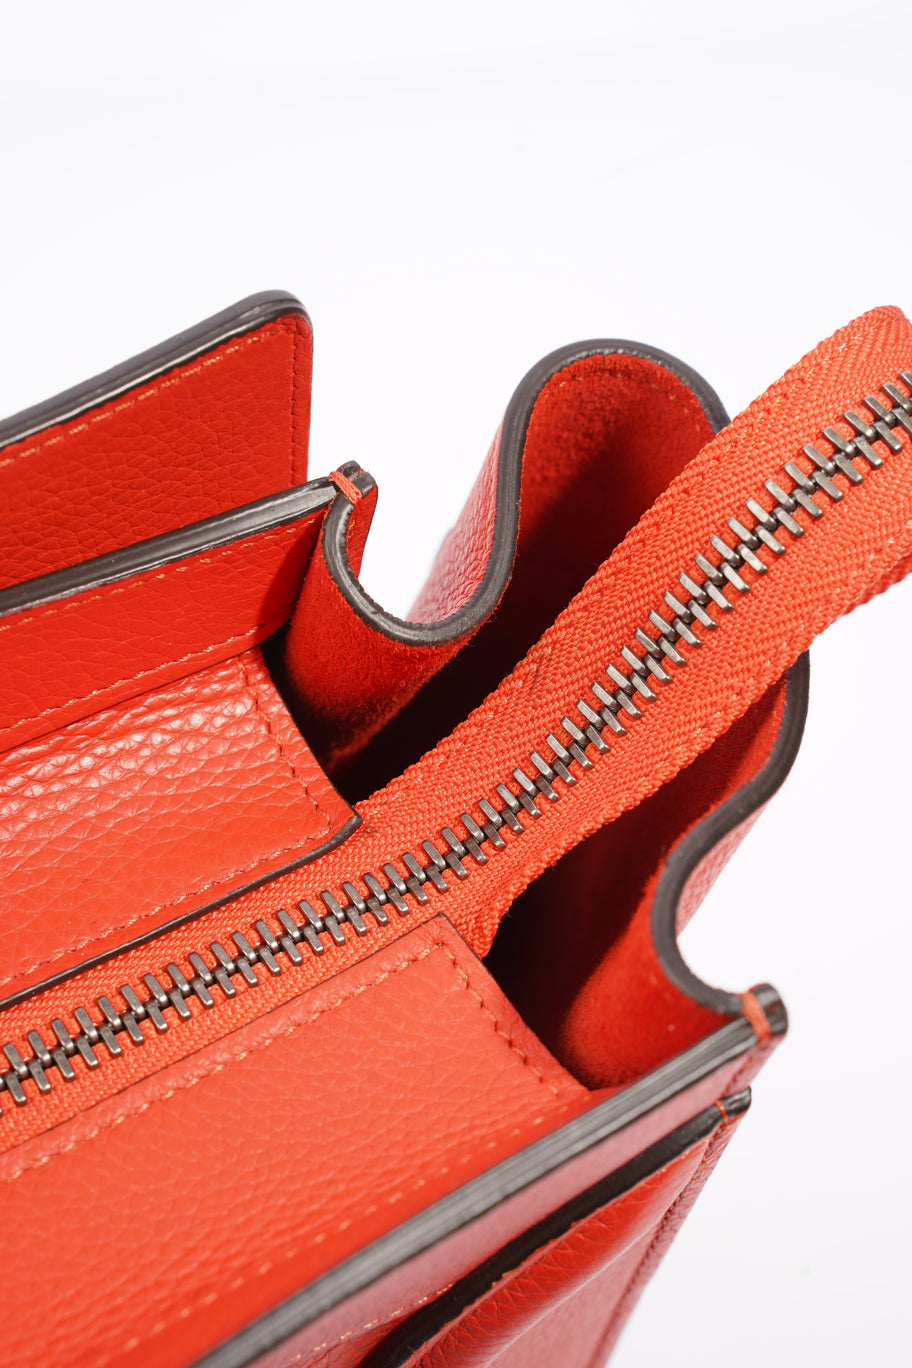 Micro Luggage Orange Calfskin Leather Image 15